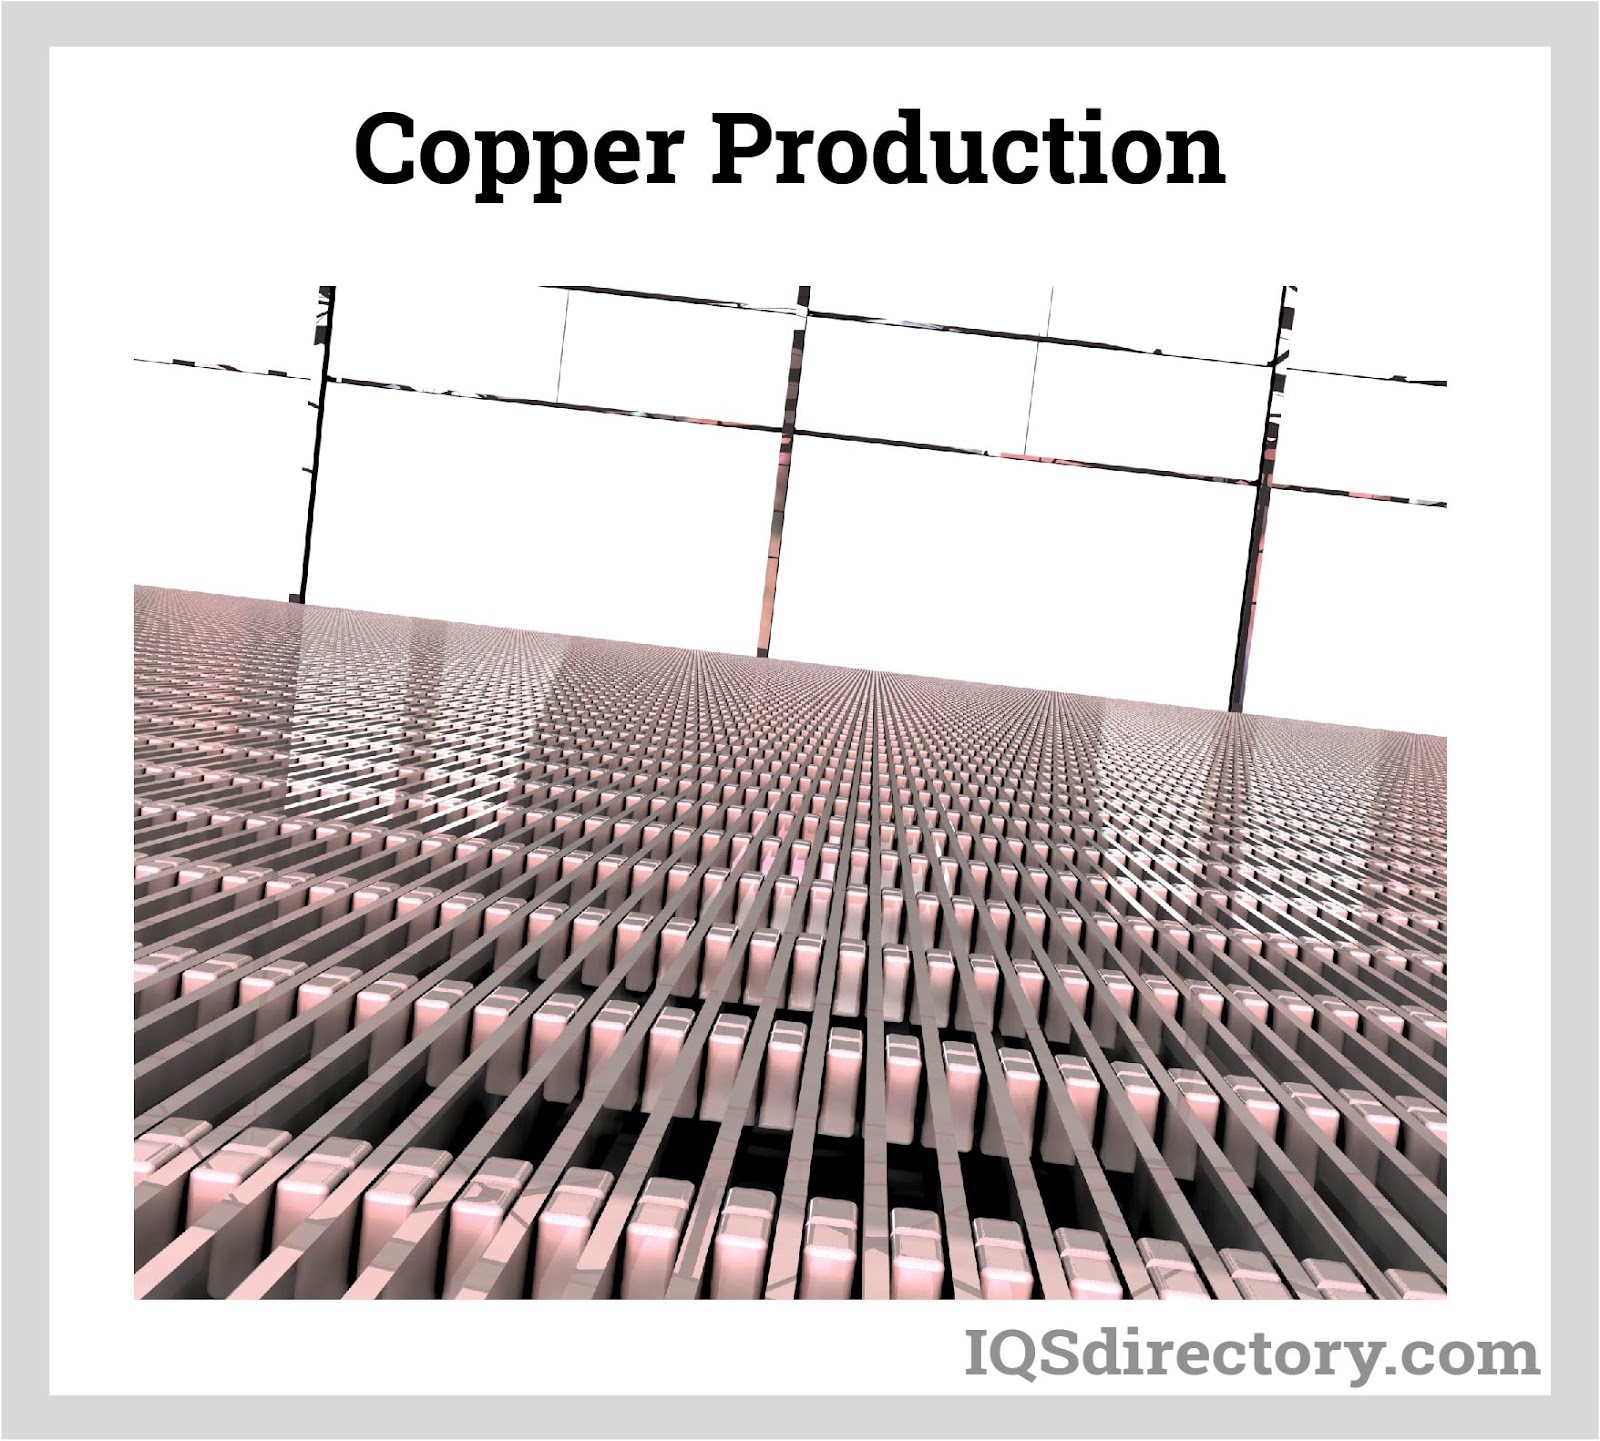 Copper Production